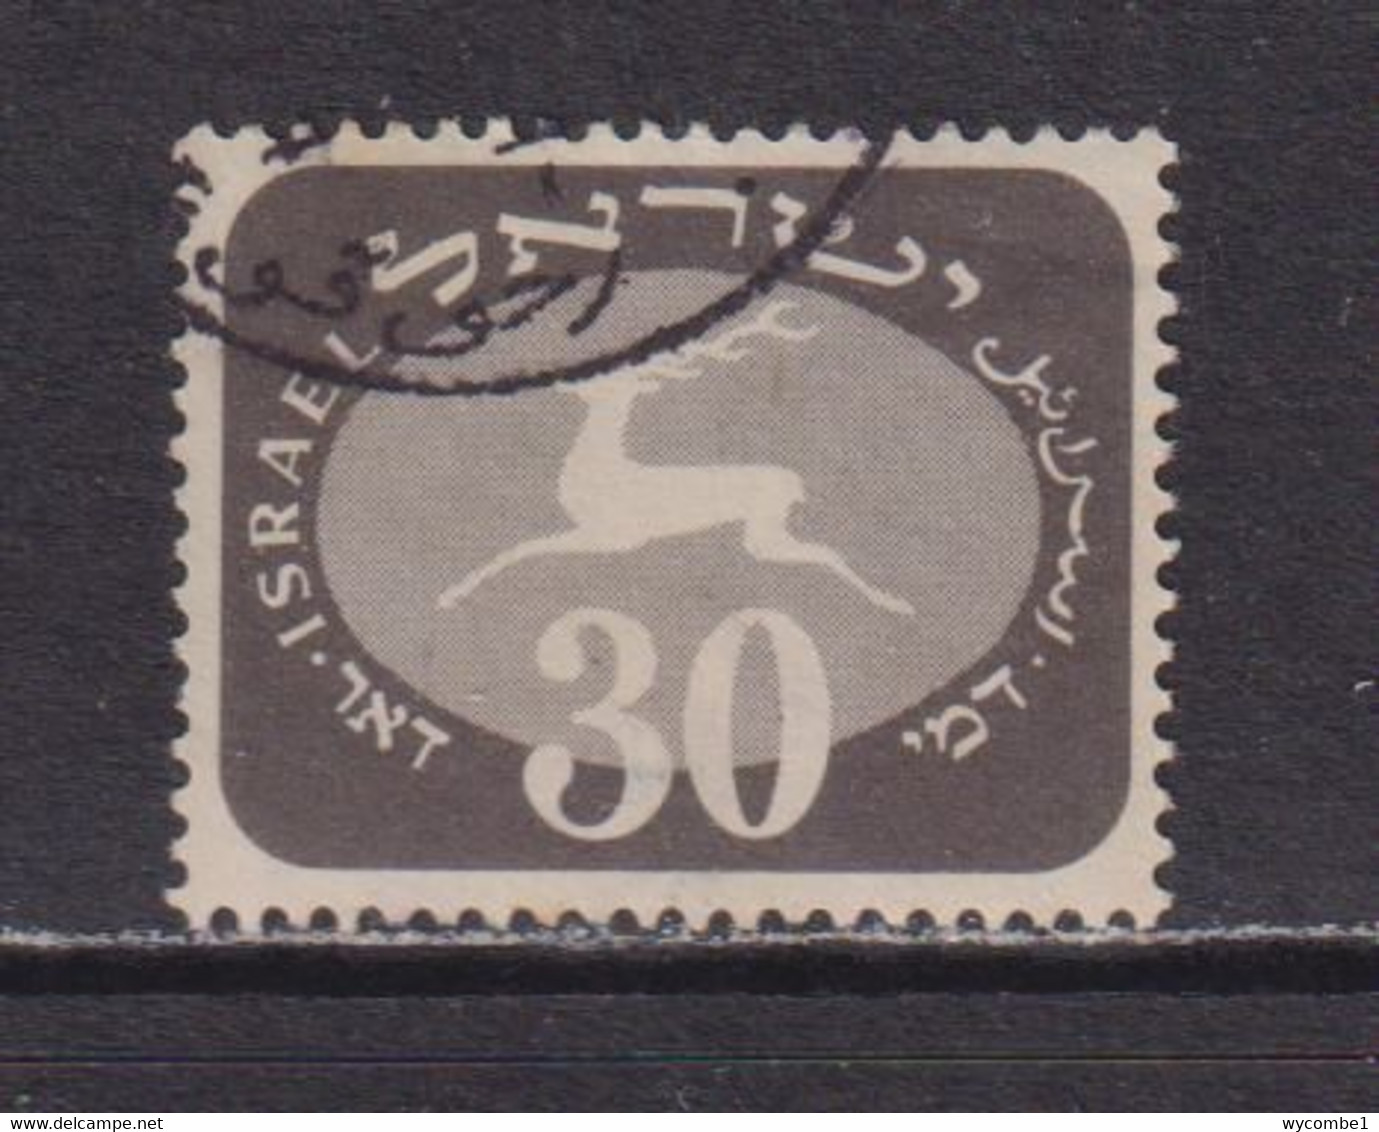 ISRAEL - 1952 Postage Due 30pr Used As Scan - Portomarken